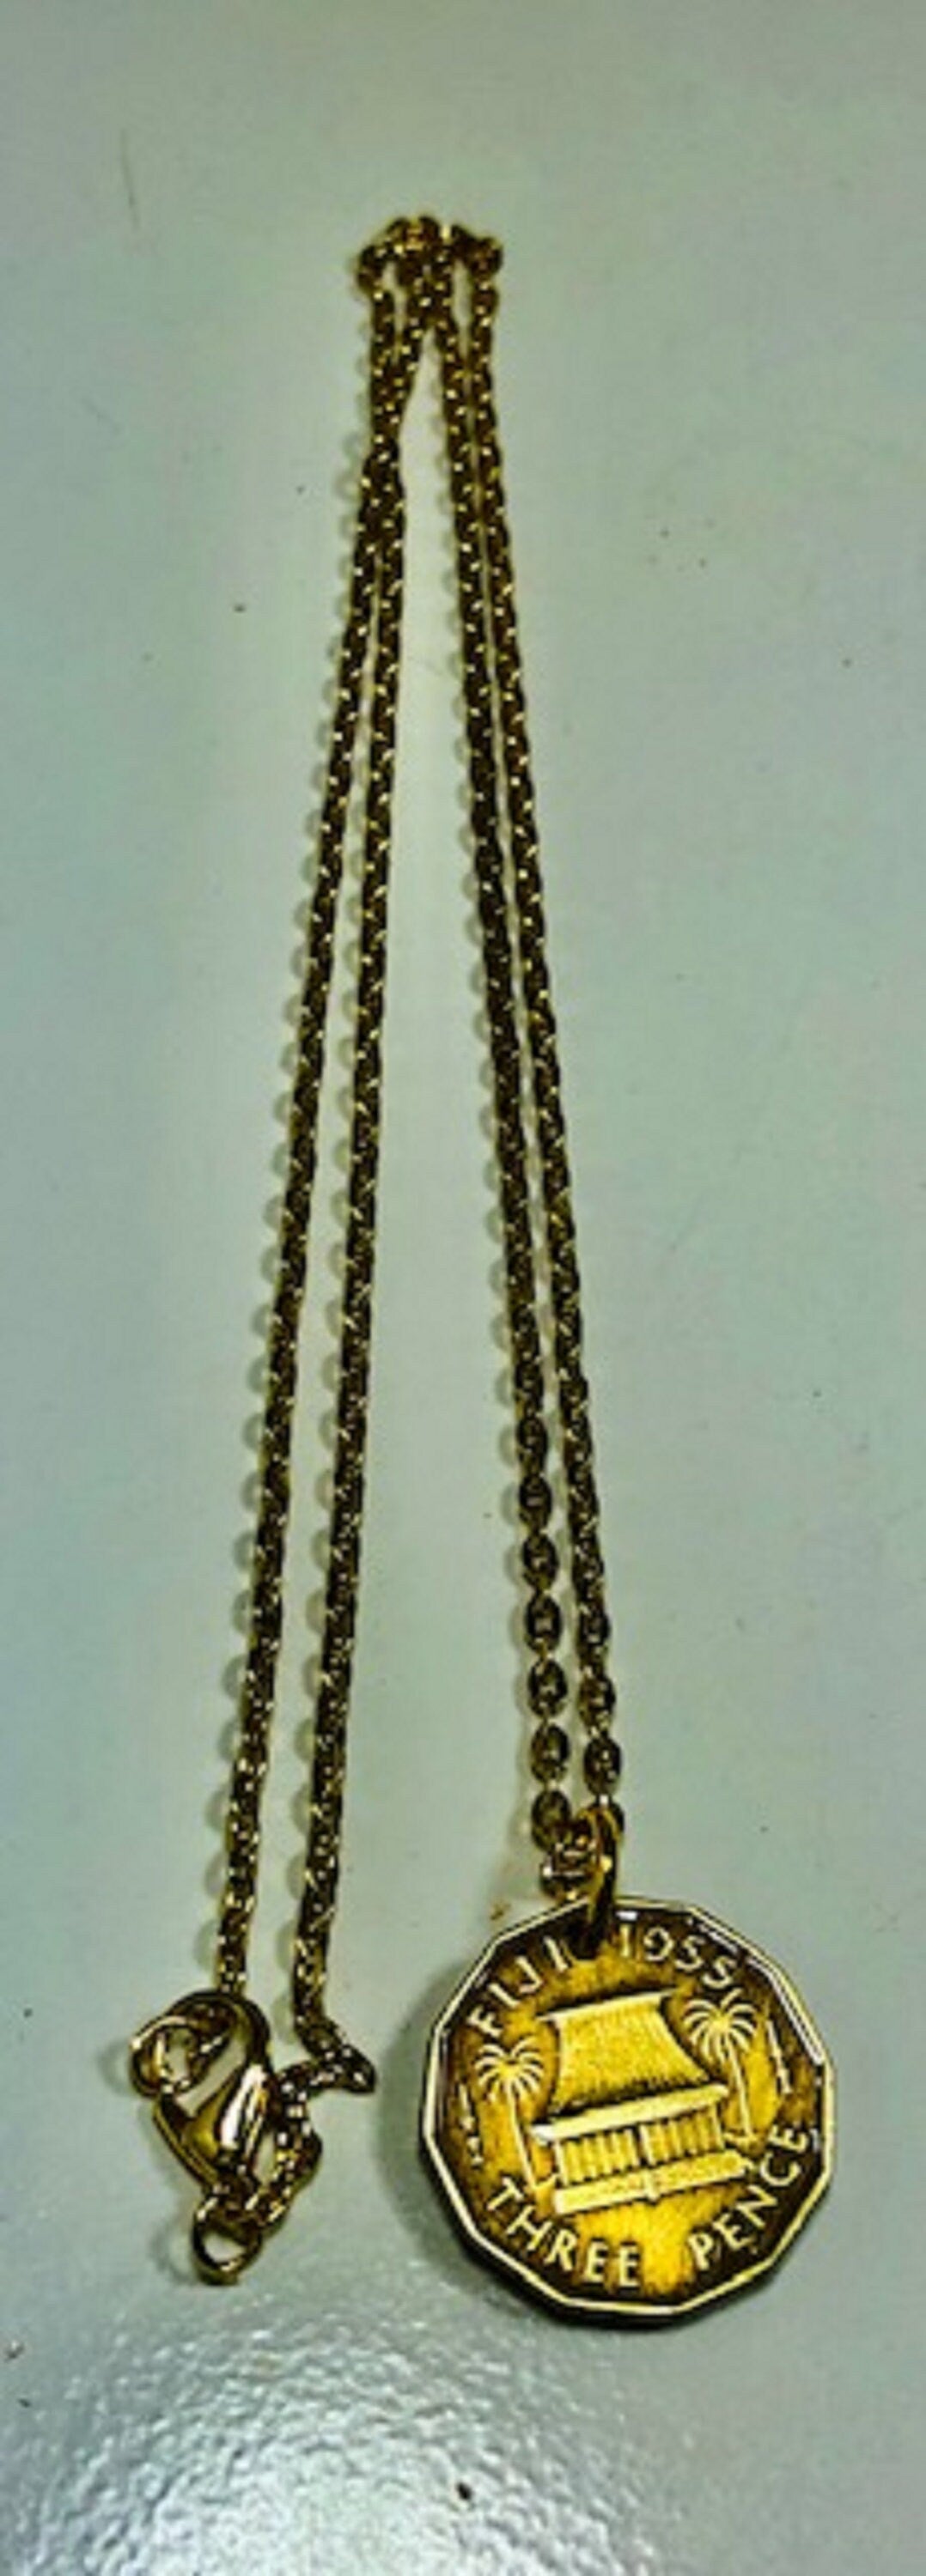 Kingdom of Jordan Coin Pendant Vintage Quarter Dinar Necklace Custom Made Rare coins - Coin Enthusiast Fashion Accessory Handmade